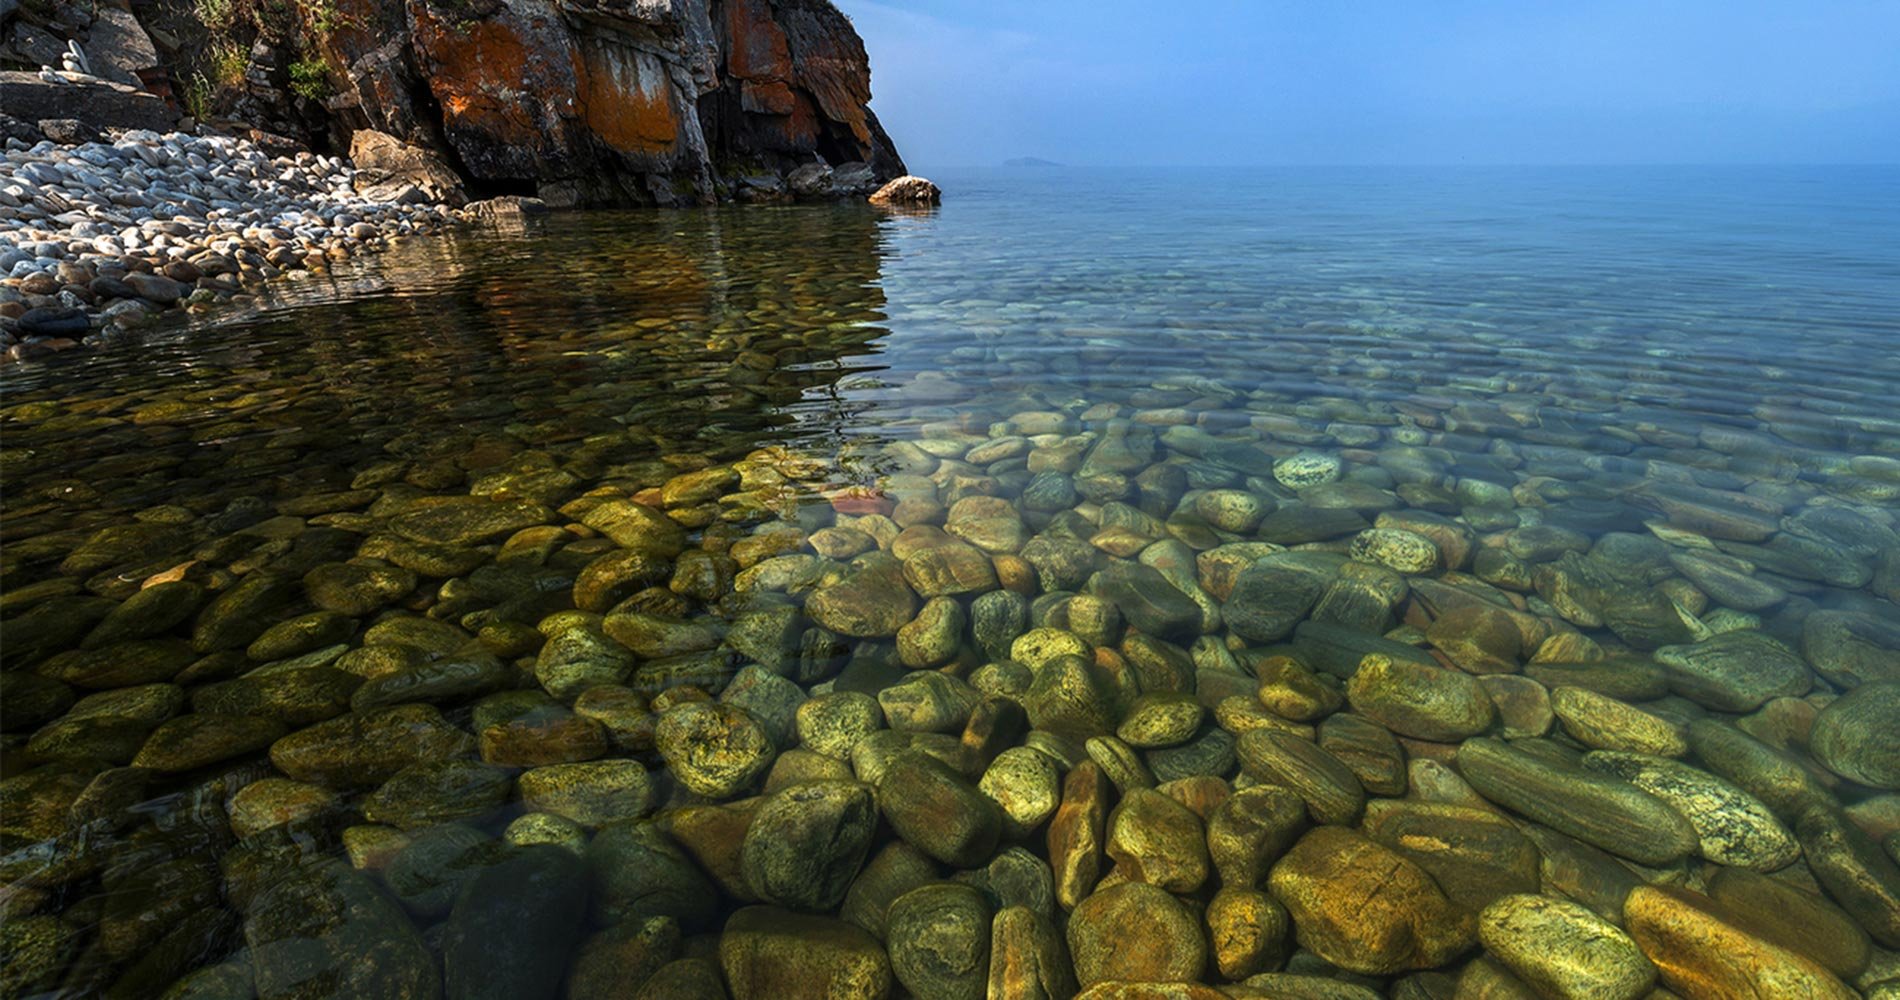 Байкал видно дно. Озеро Байкал вода. Чистая вода Байкала. Озеро Байкал прозрачность воды. Озеро Байкал Байкальская вода.